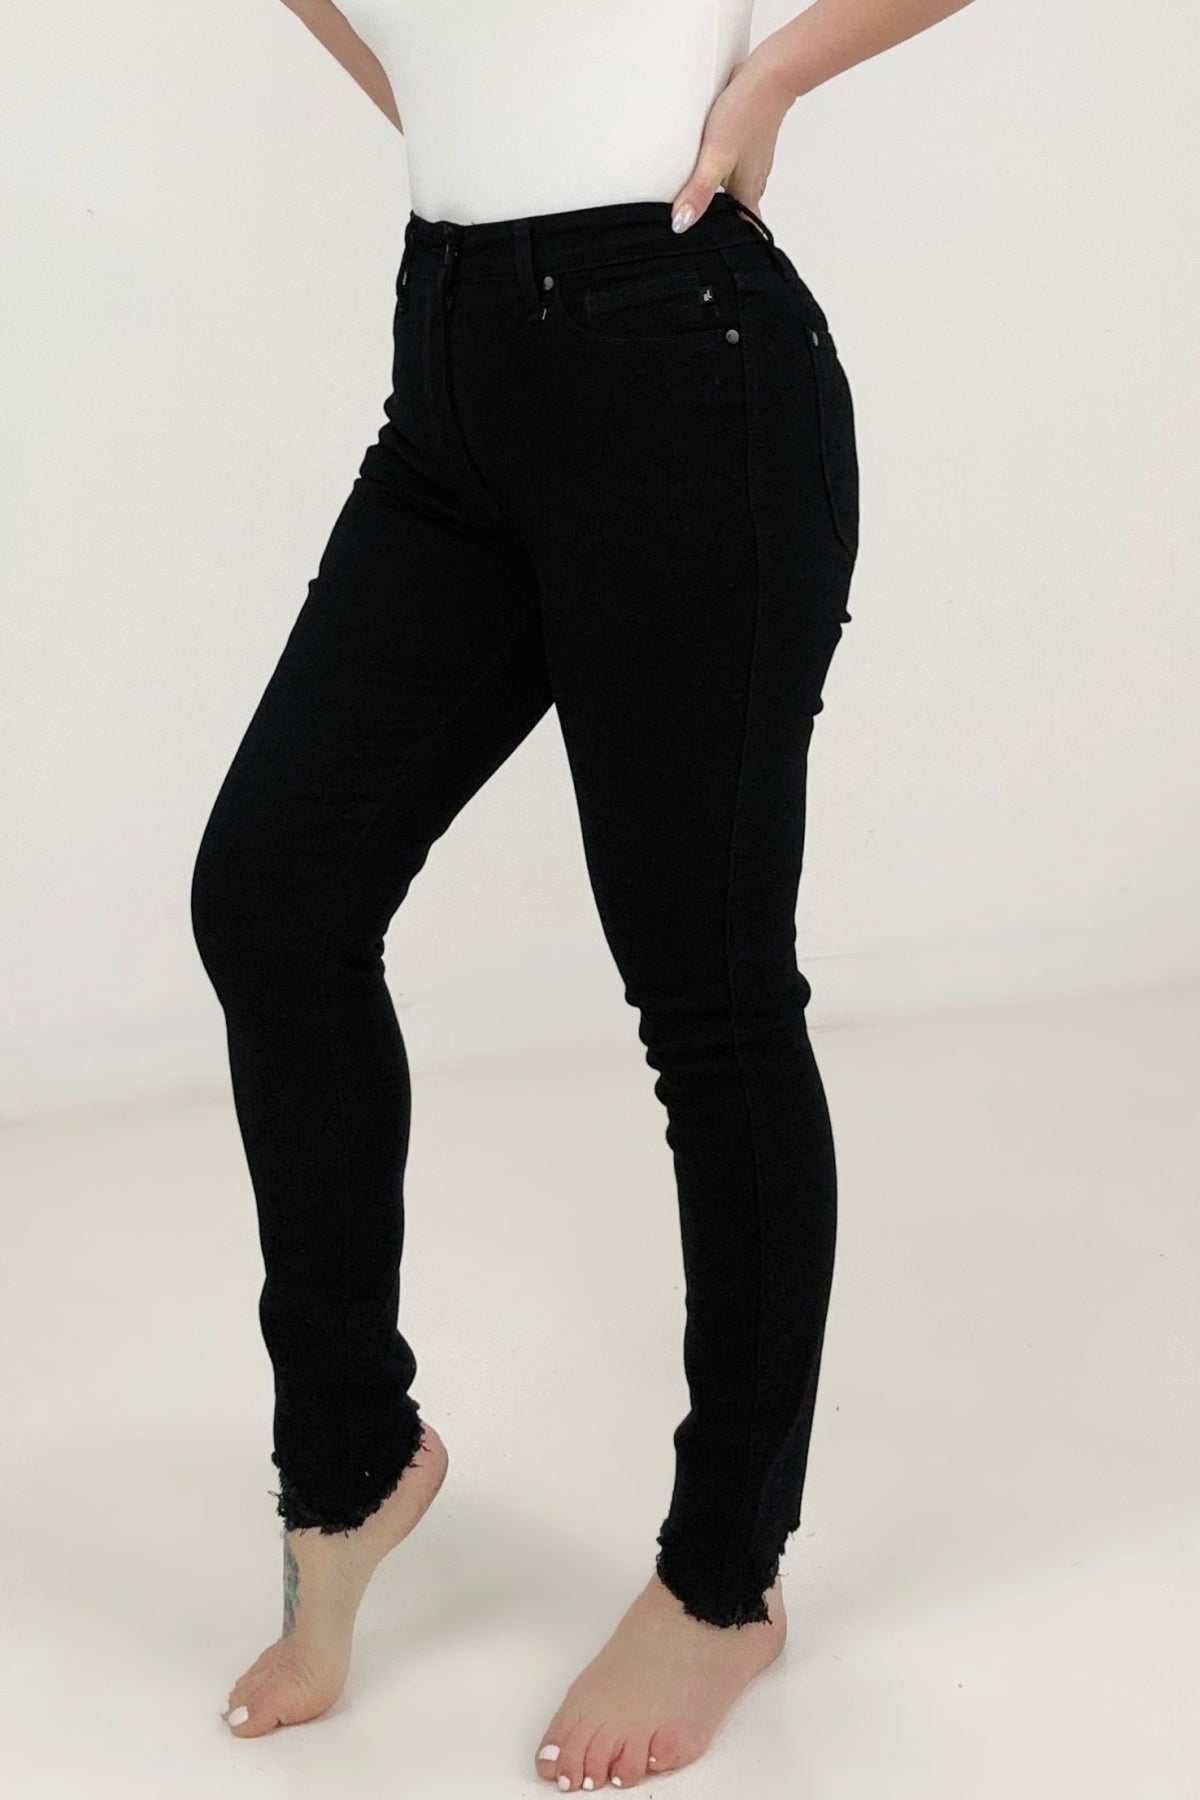 Judy Blue High Waist "Control Top" with Shark Hem & Back Shield Pkt Skinny Jeans